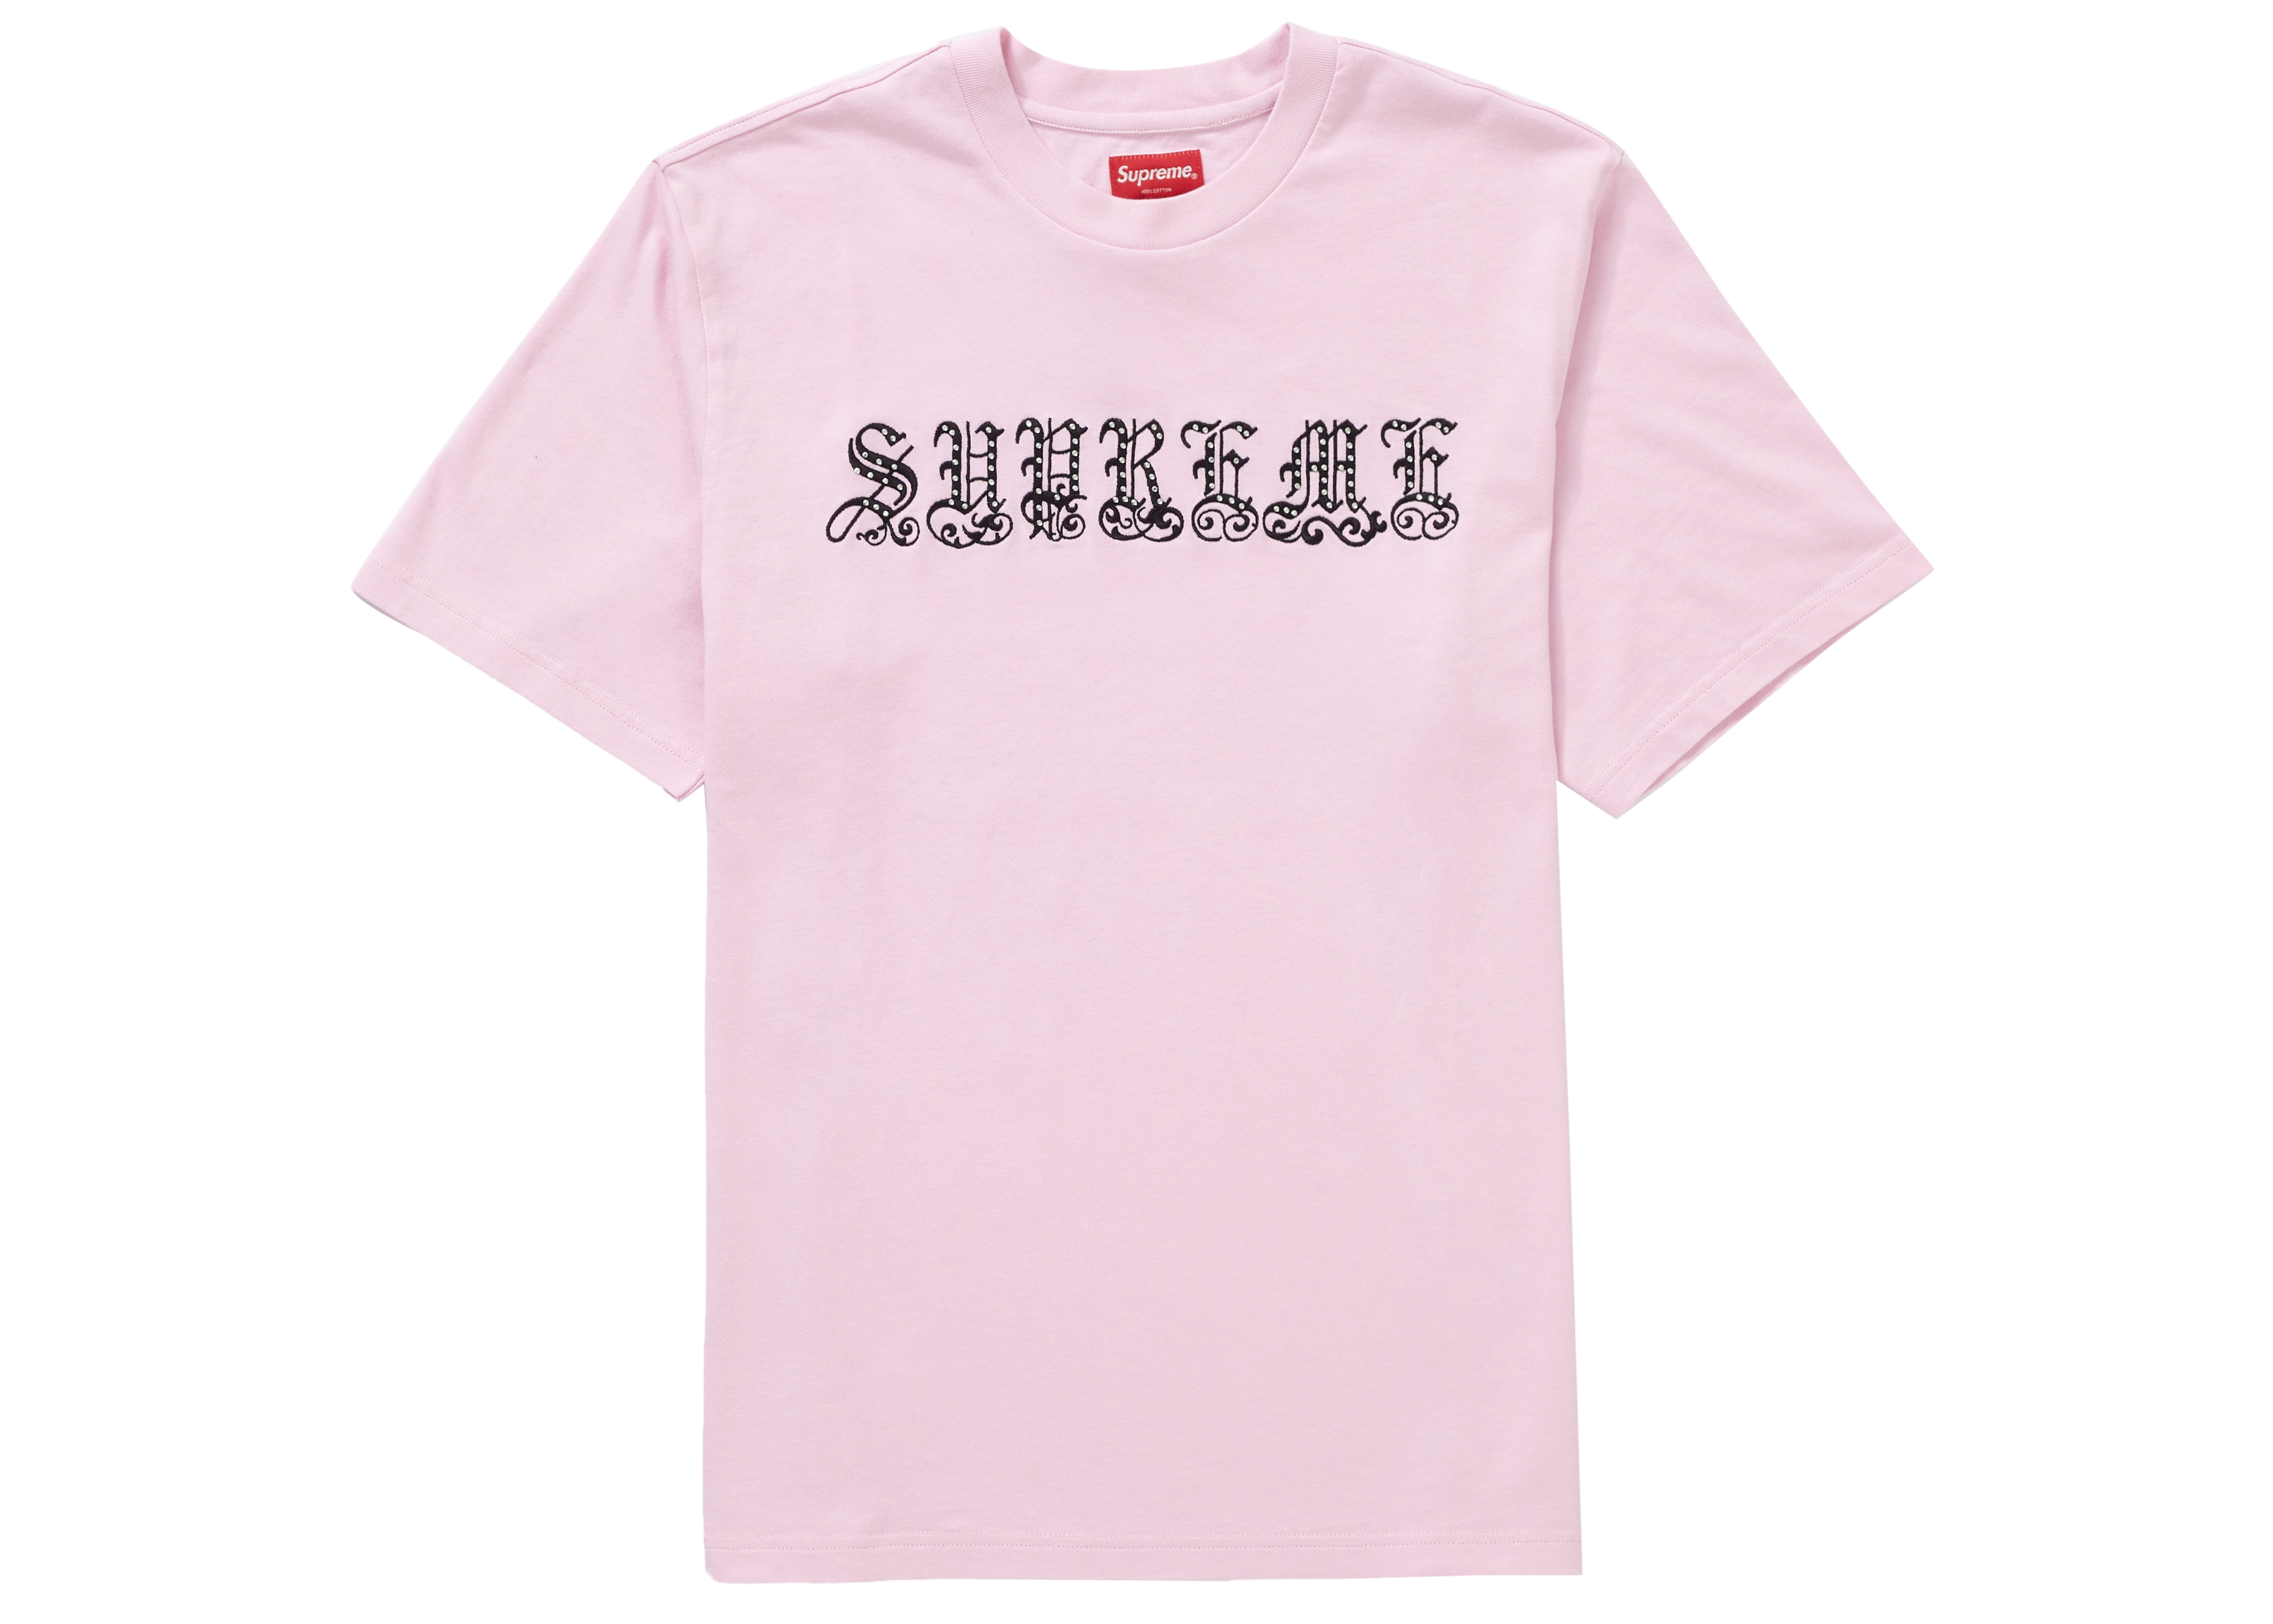 Supreme Old English Rhinestone S/S Top Light Pink Men's - SS21 - US